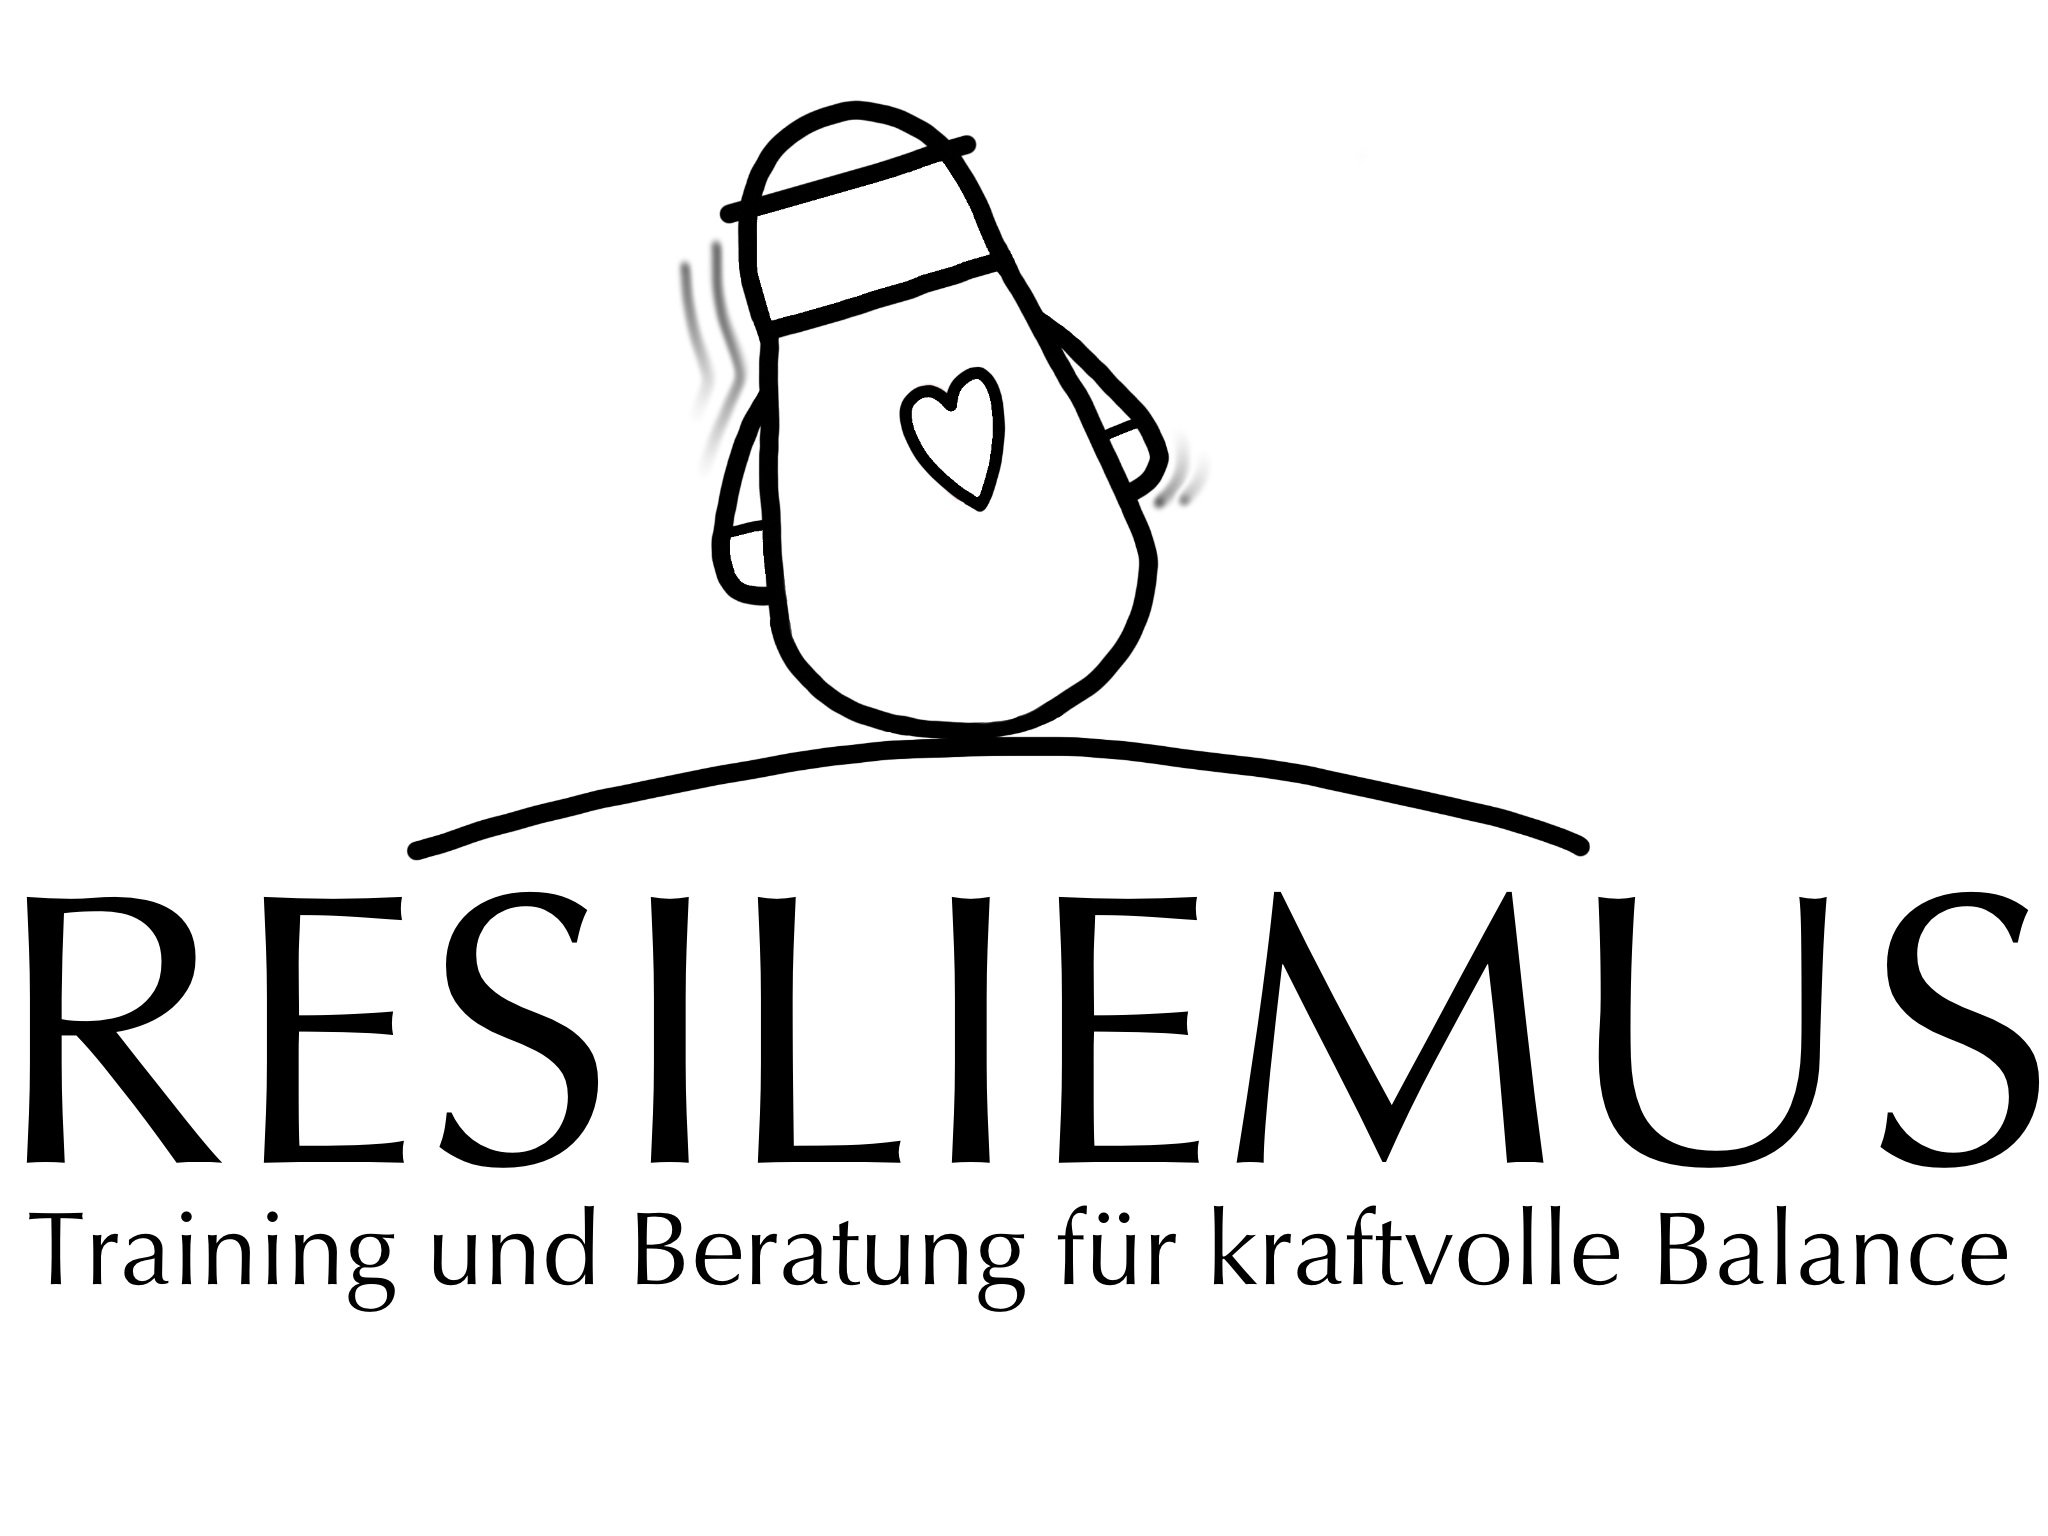 Resiliemus Logo Resilienz